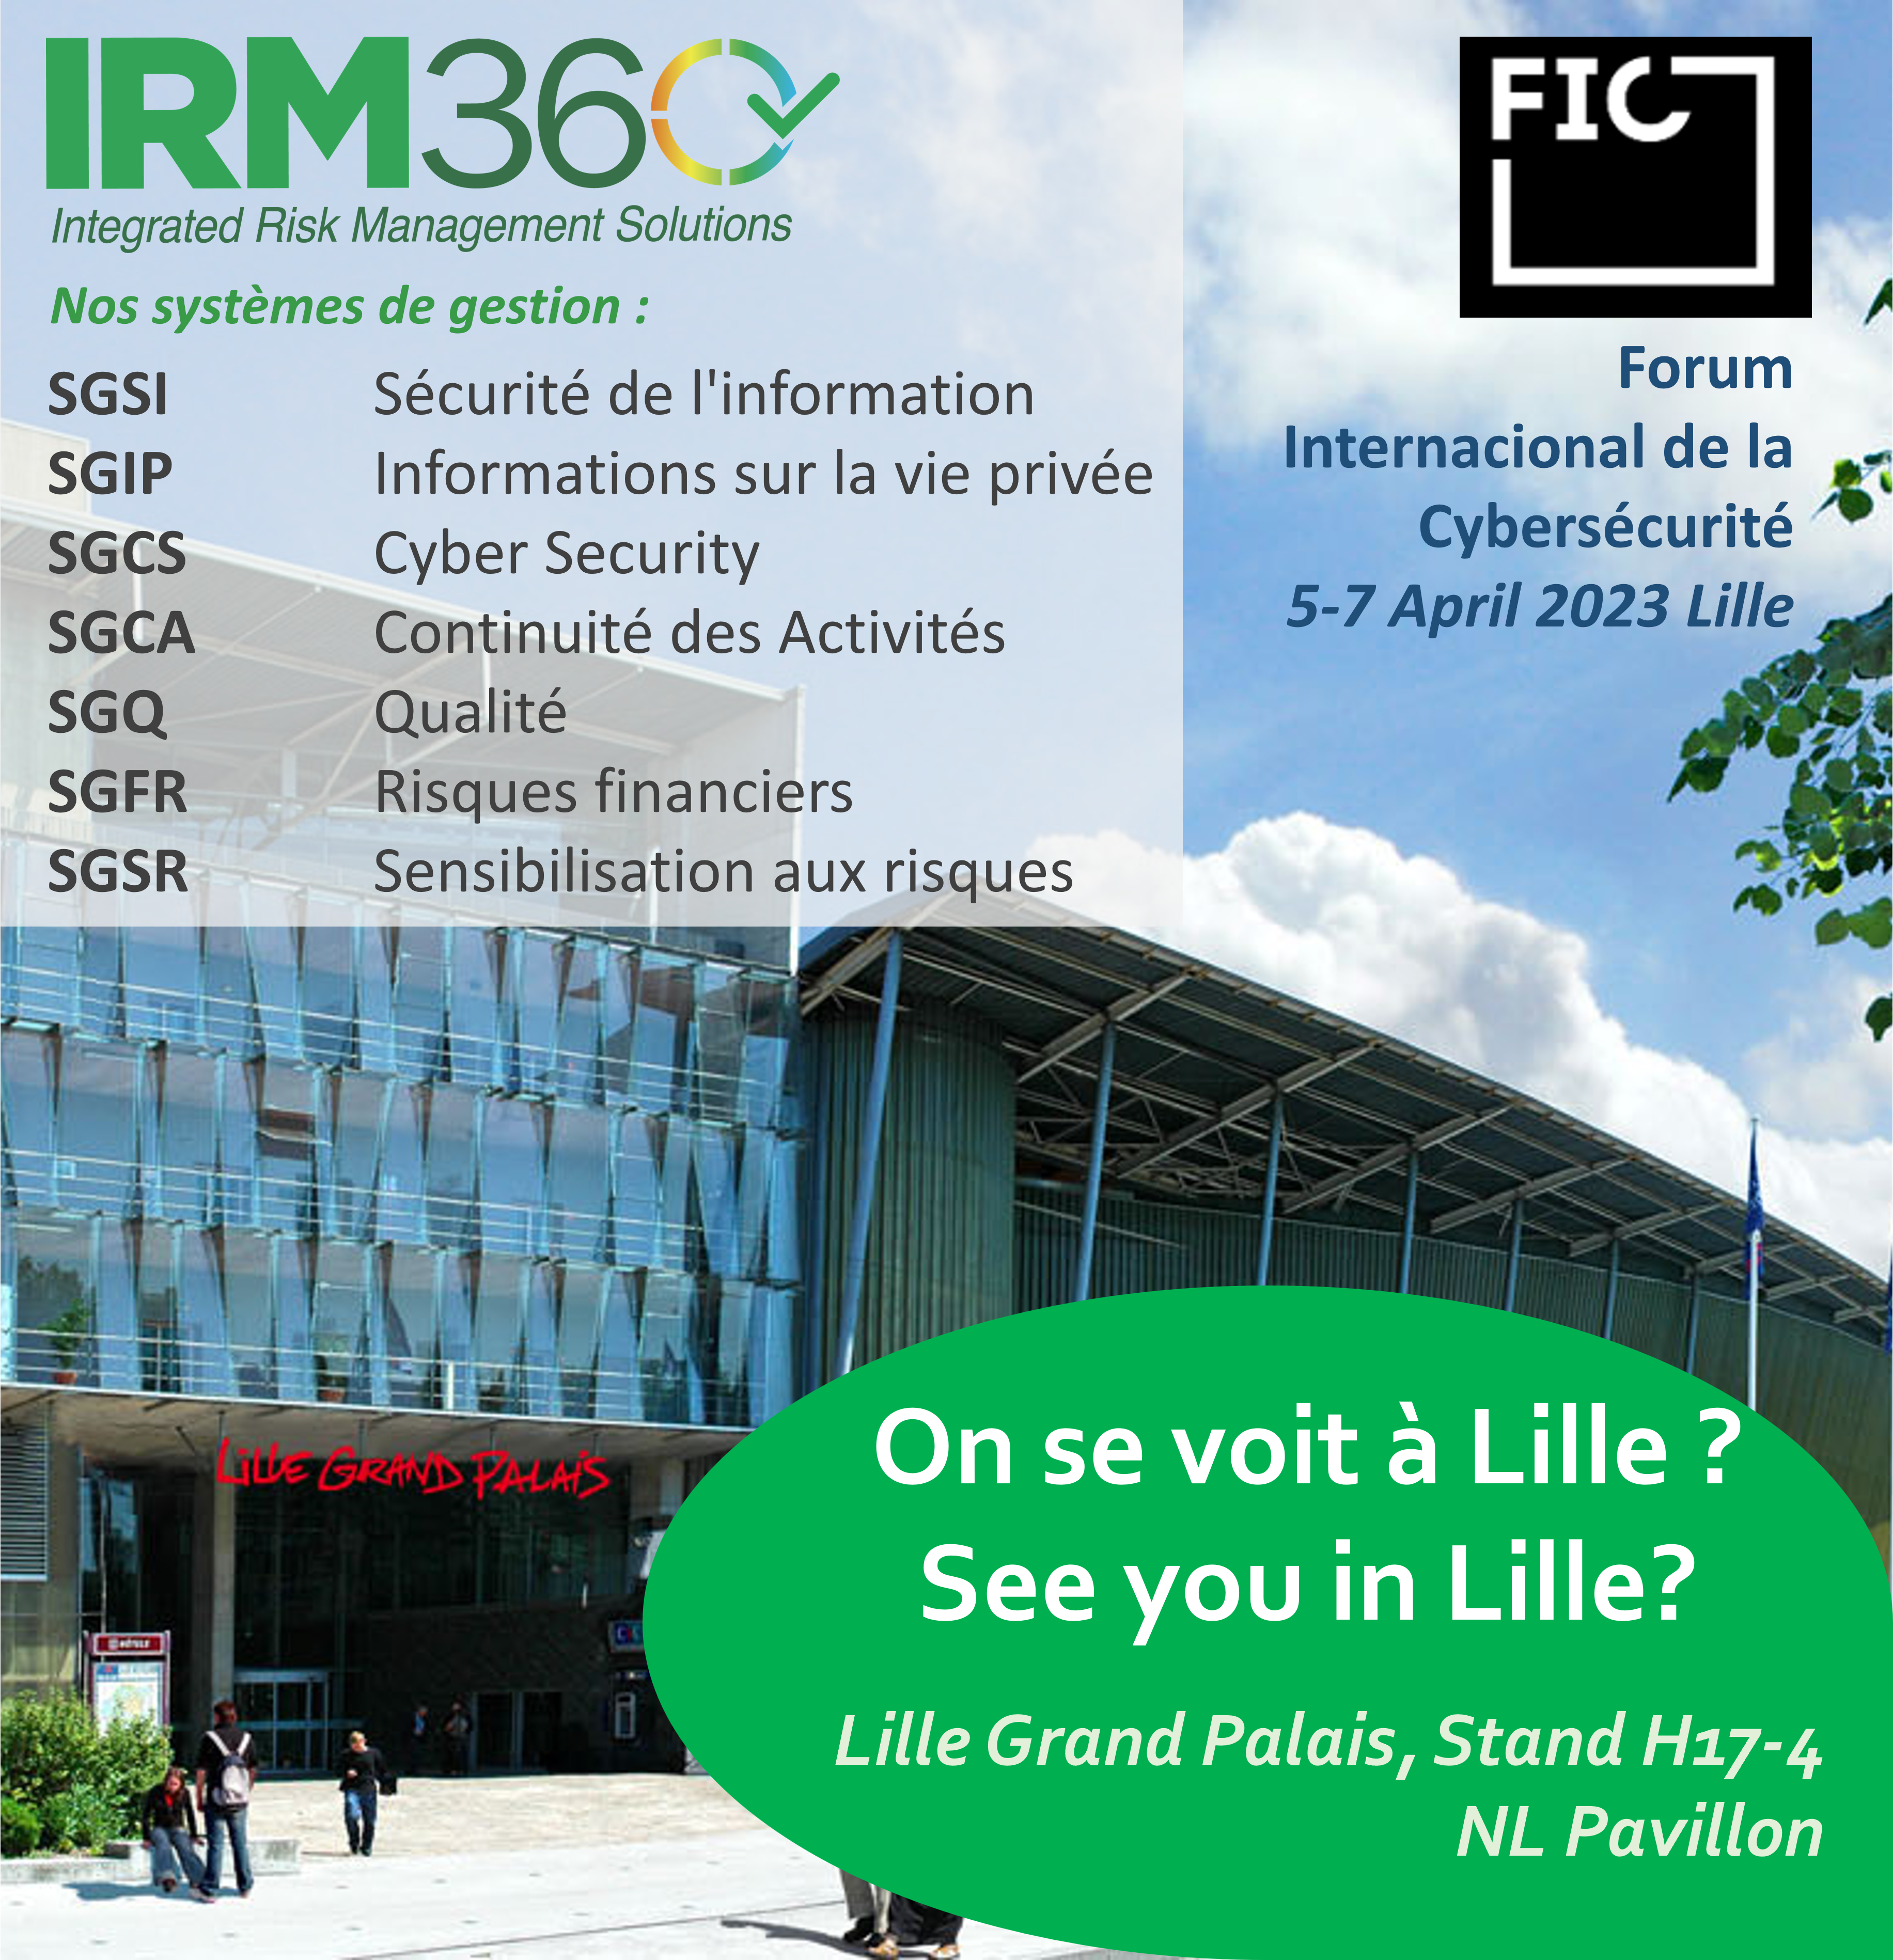 IRM360 til stede på FIC i Lille 